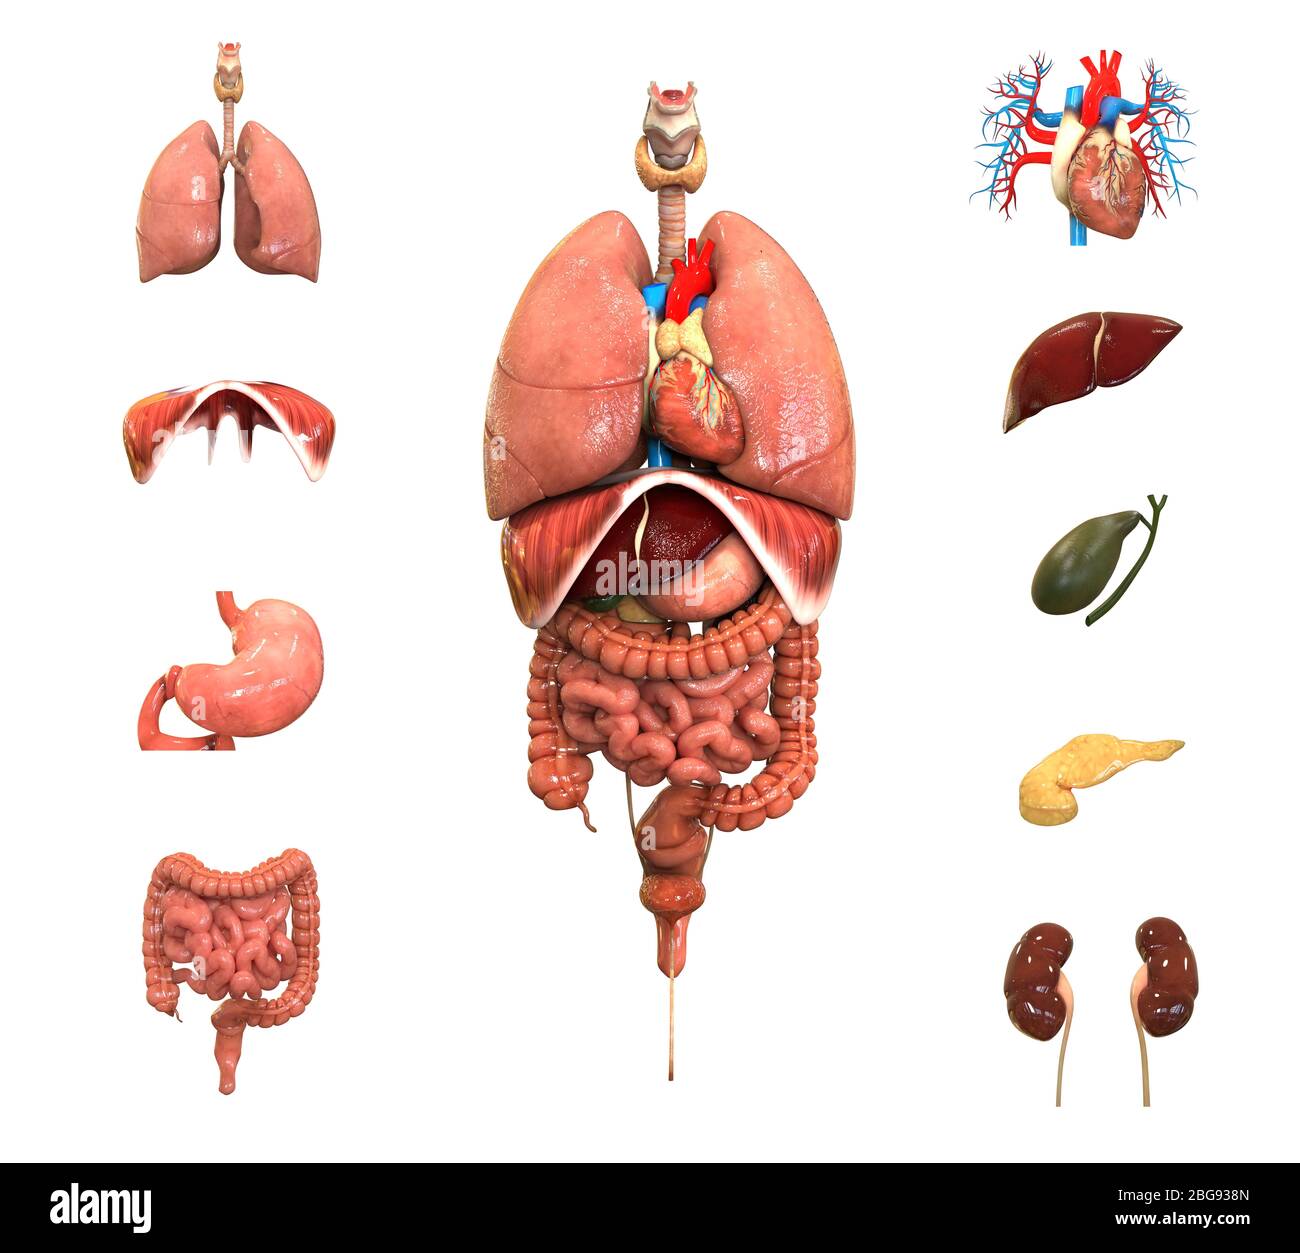 Human Body Complete Internal Organs Anatomy Stock Photo